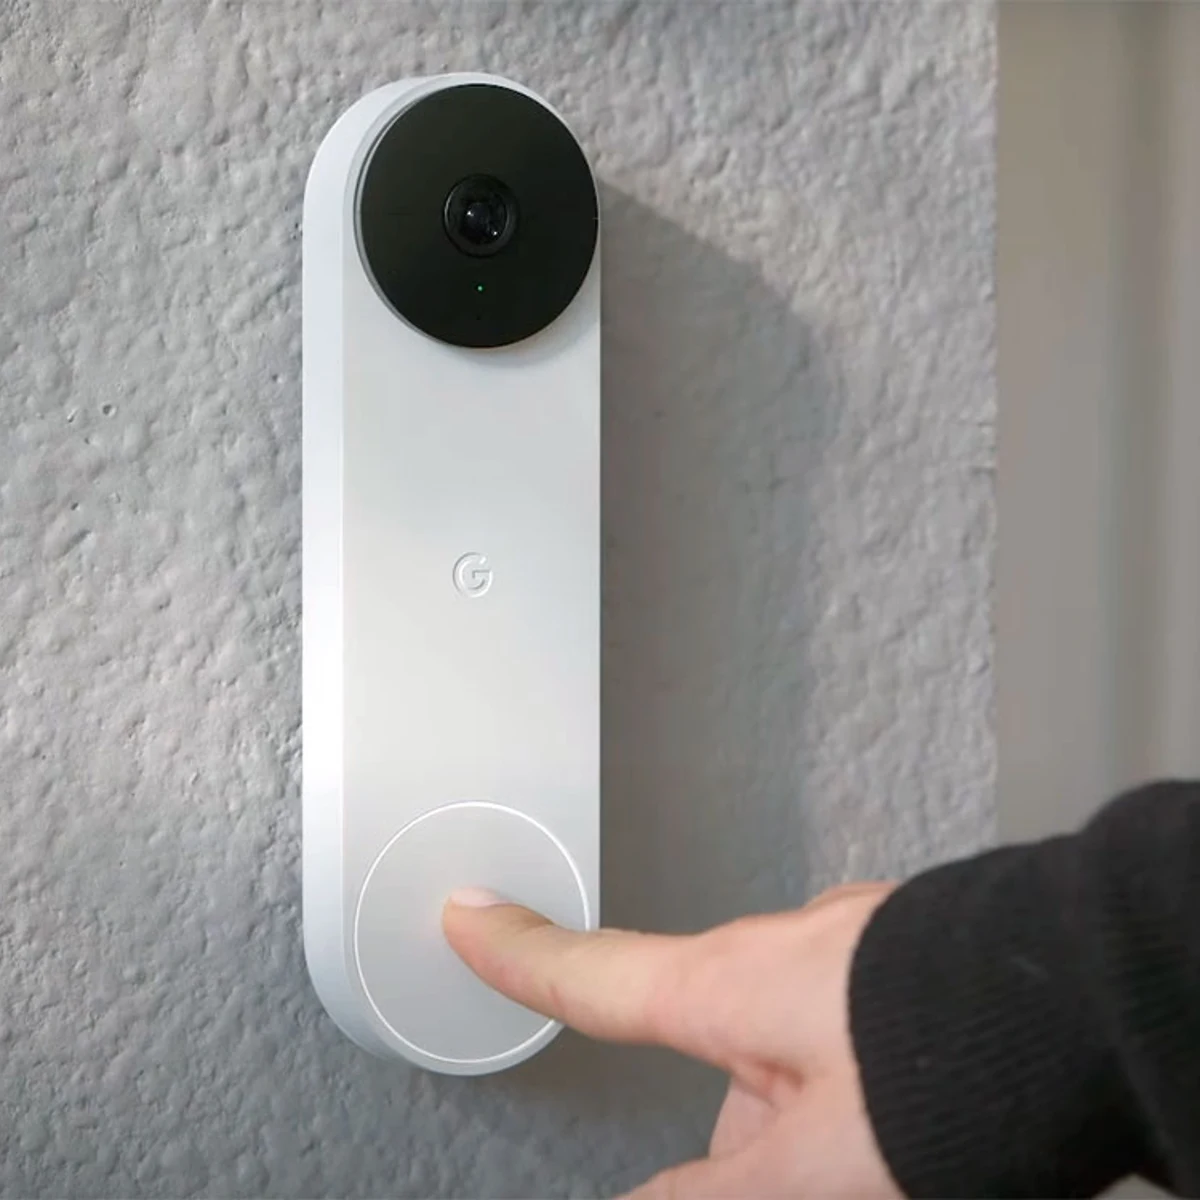 El Nest Doorbell llega a España, el timbre inteligente de Google